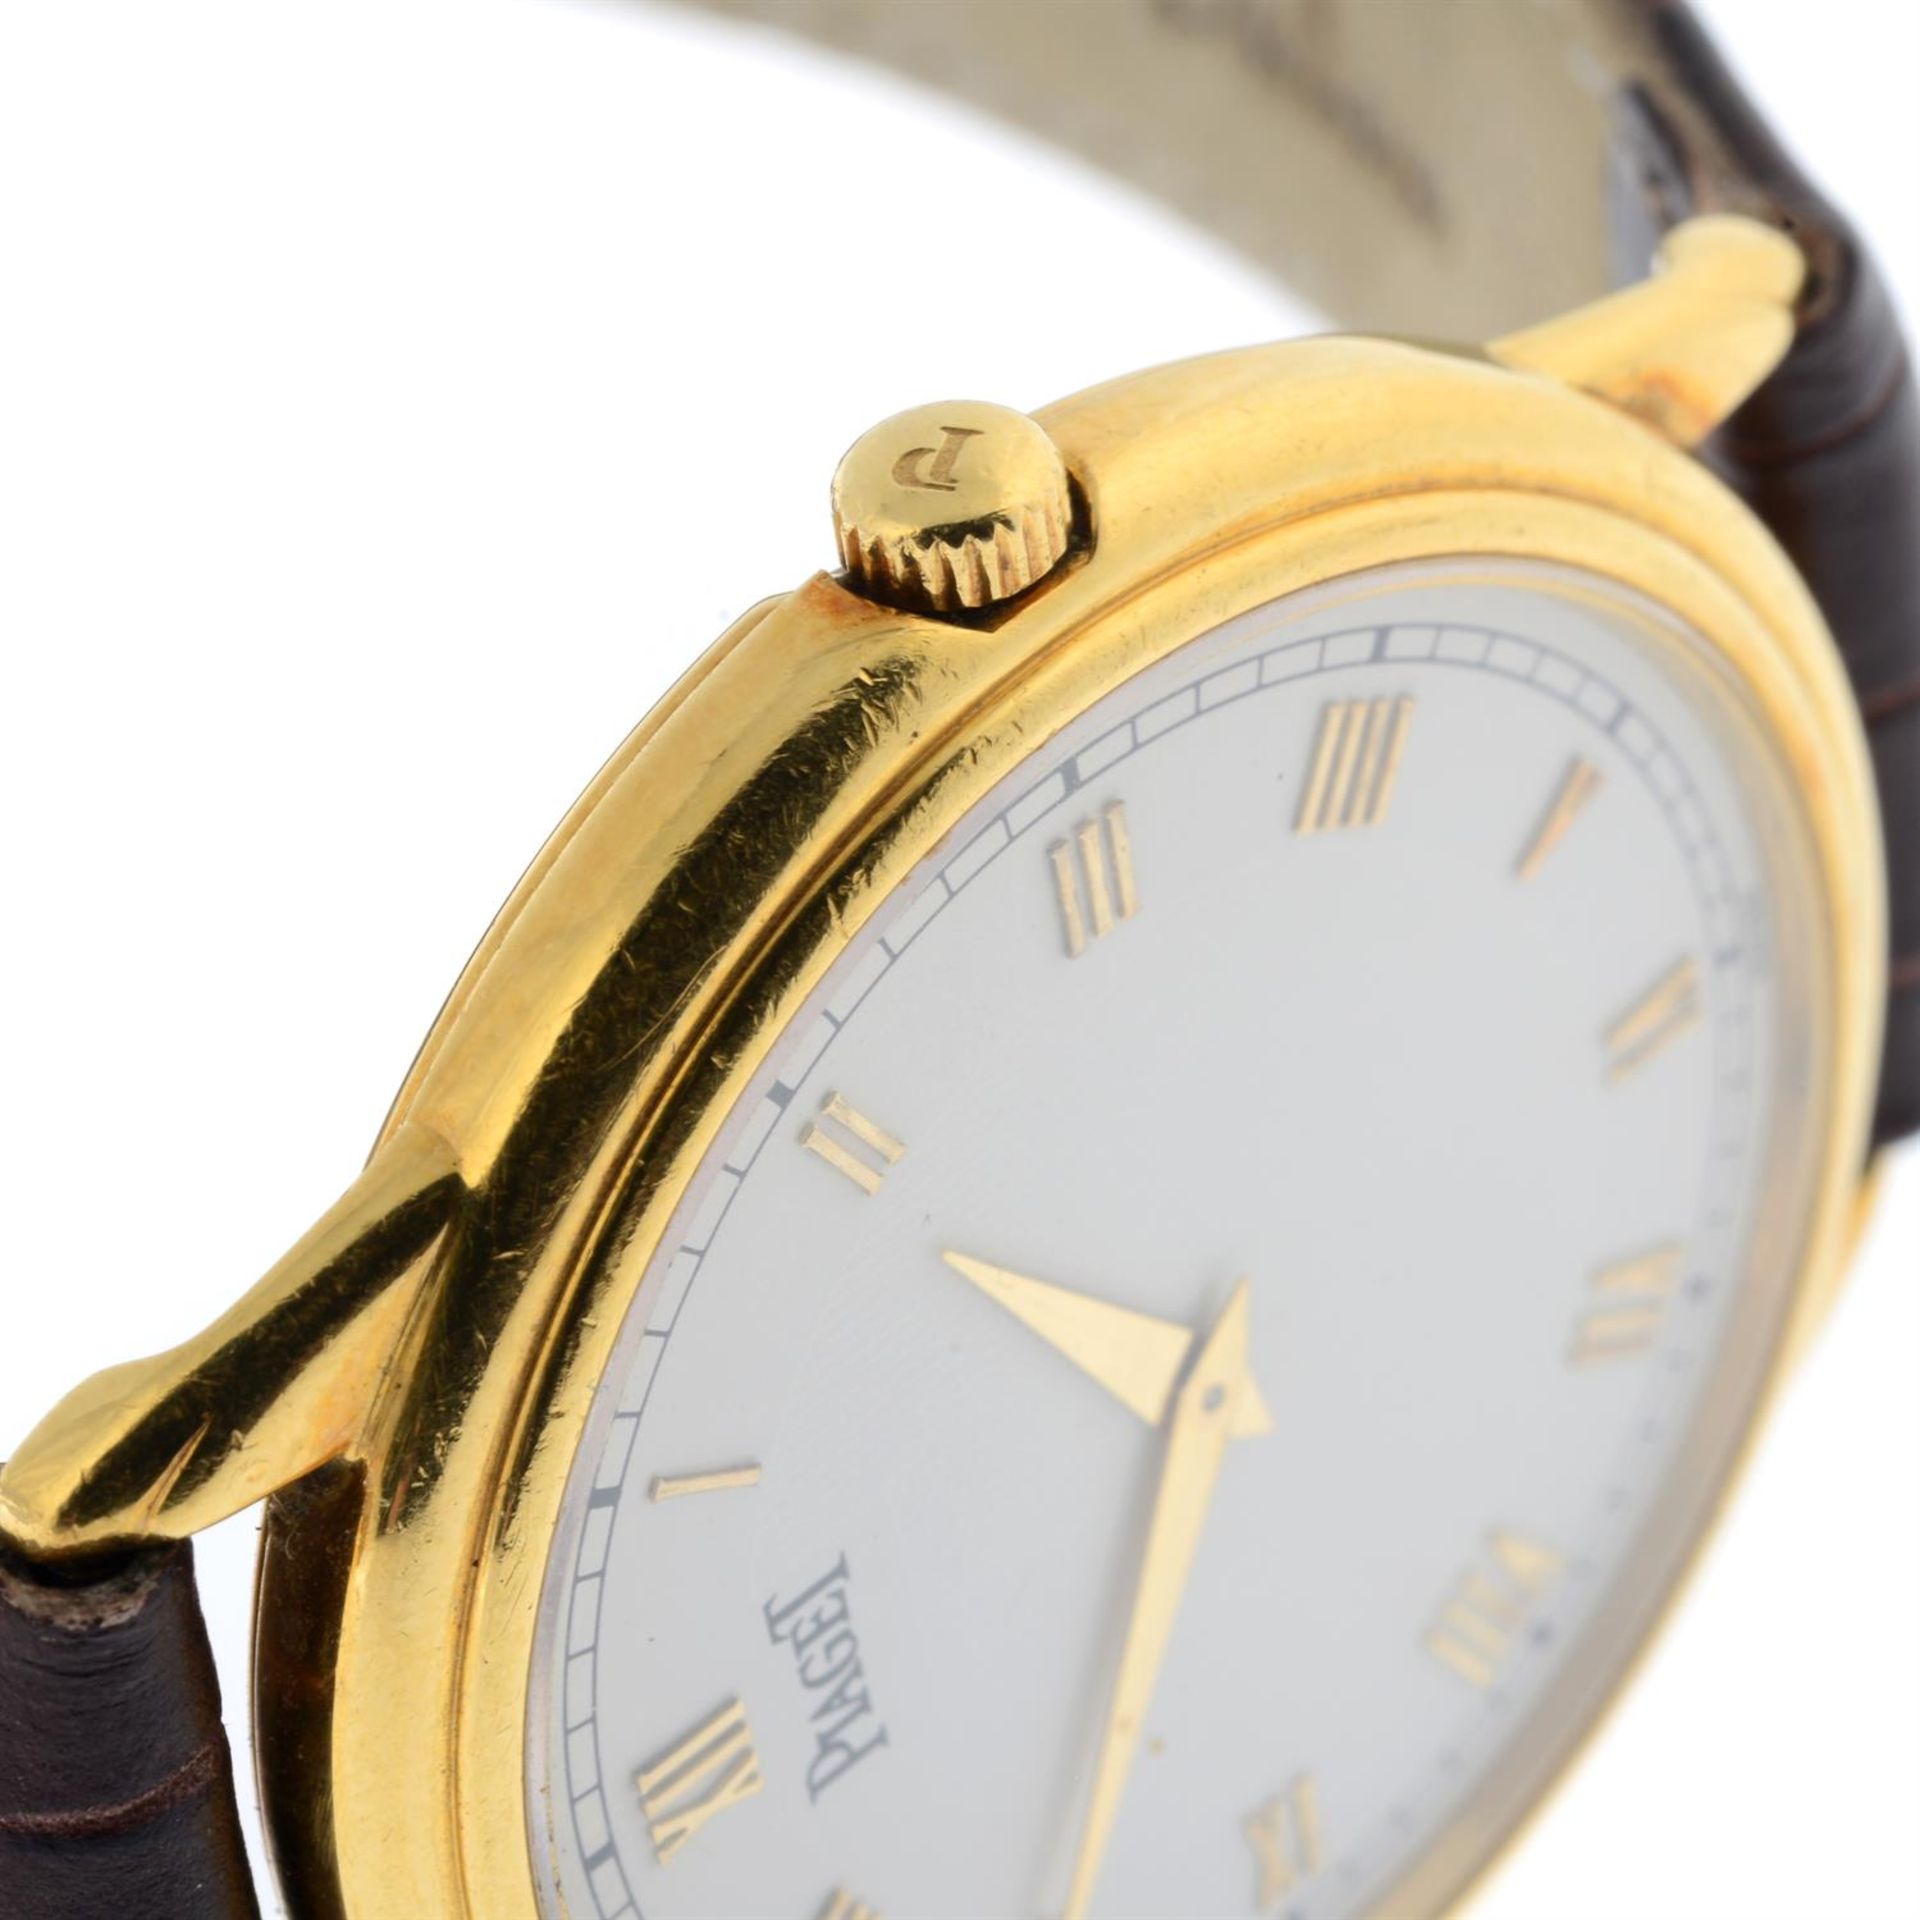 PIAGET - an 18ct yellow gold Ultra Thin wrist watch, 33mm. - Image 4 of 5